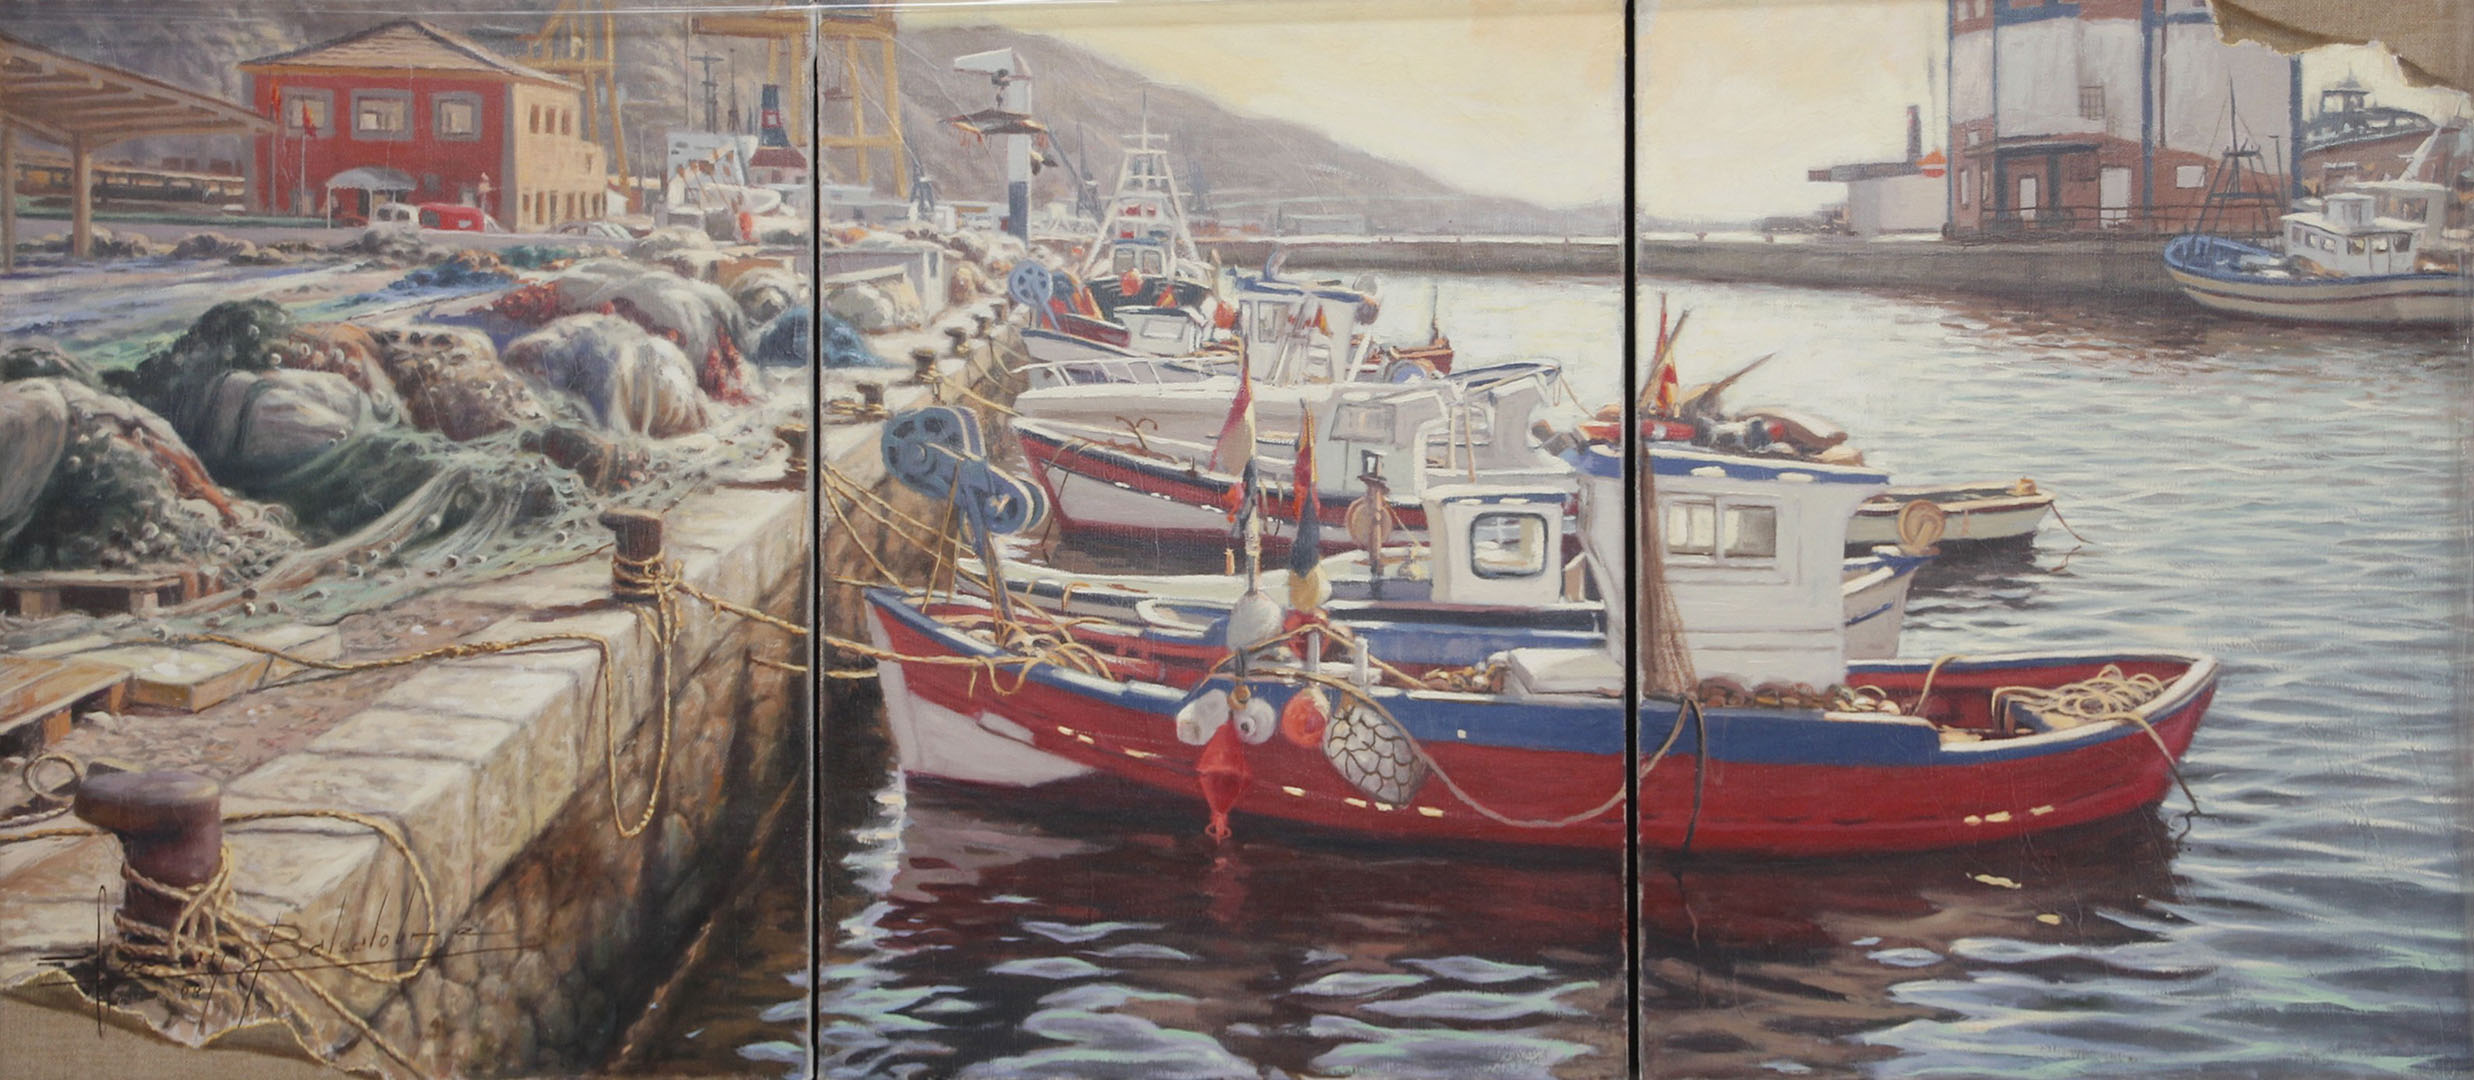 Puerto pesquero (cartagena)